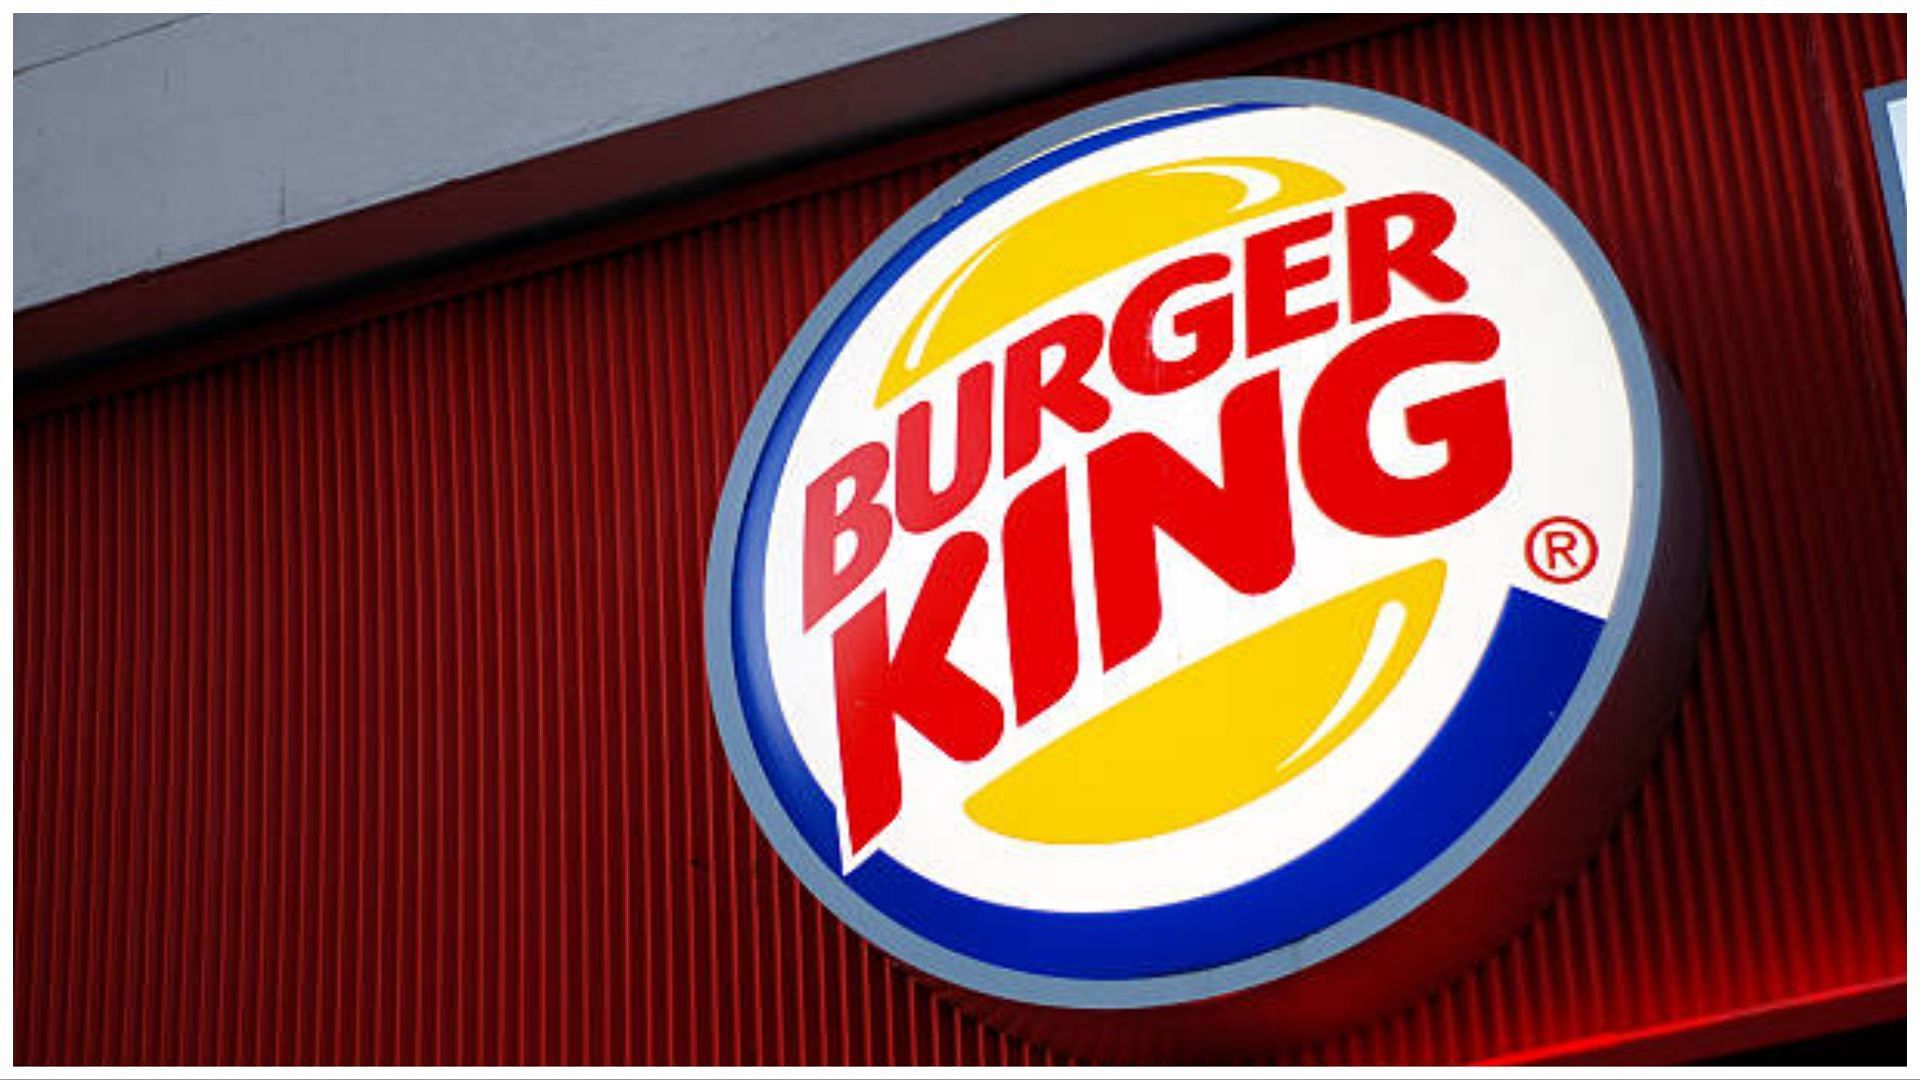 Burger King (Image via Getty Images)